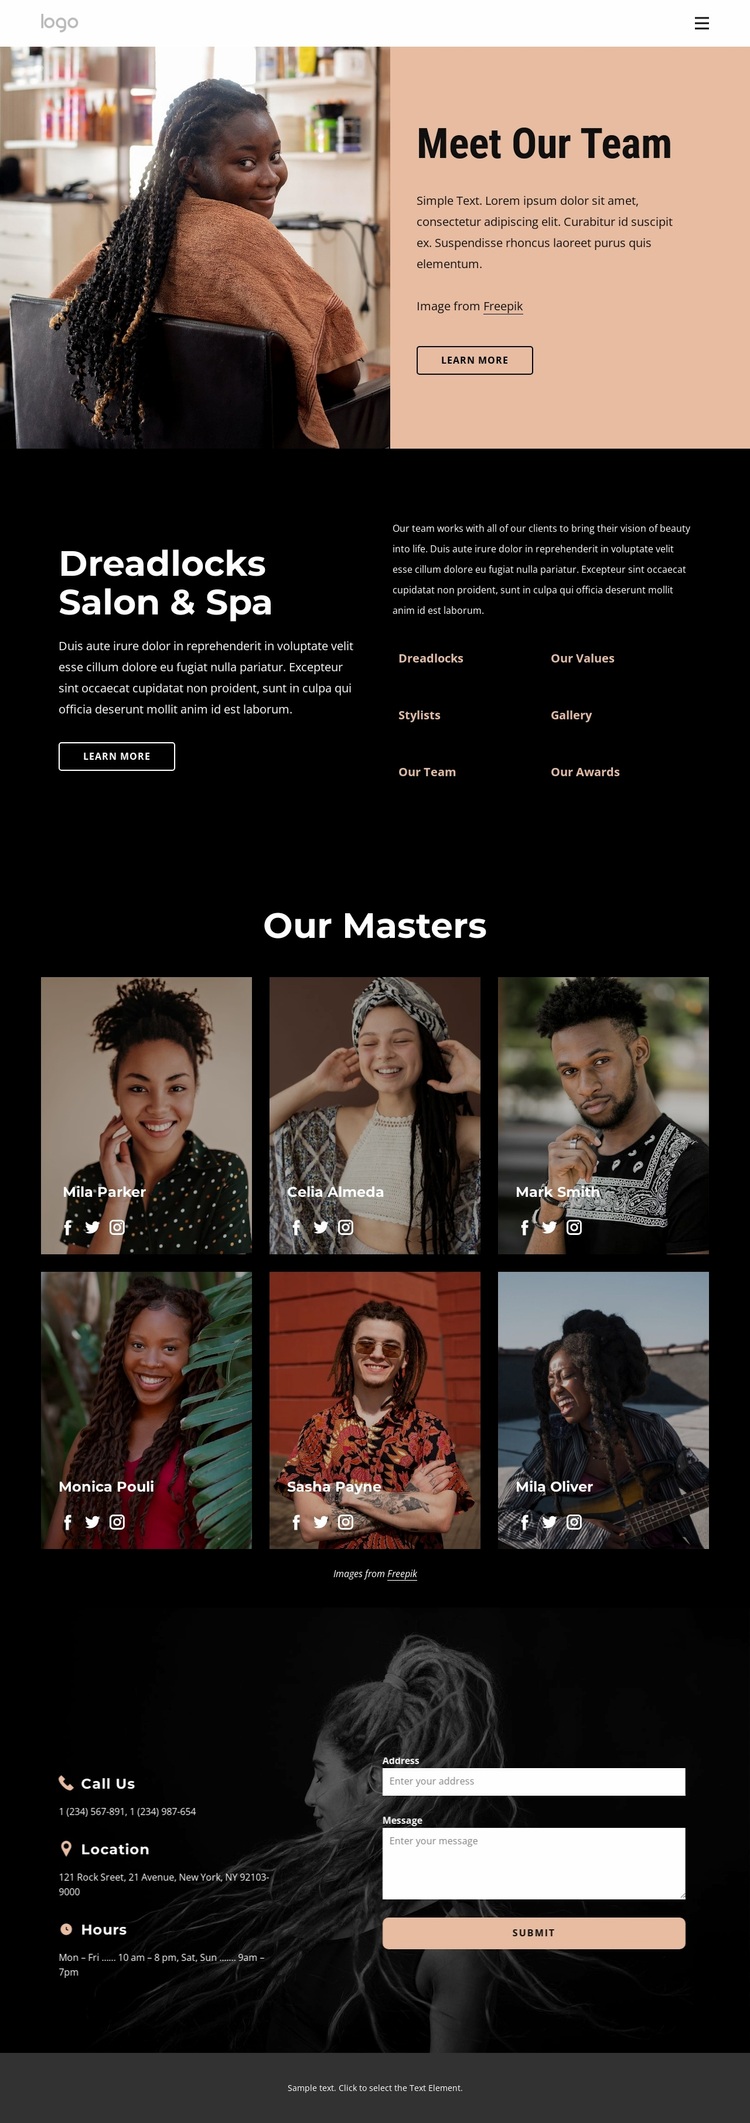 Meet our masters Website Design